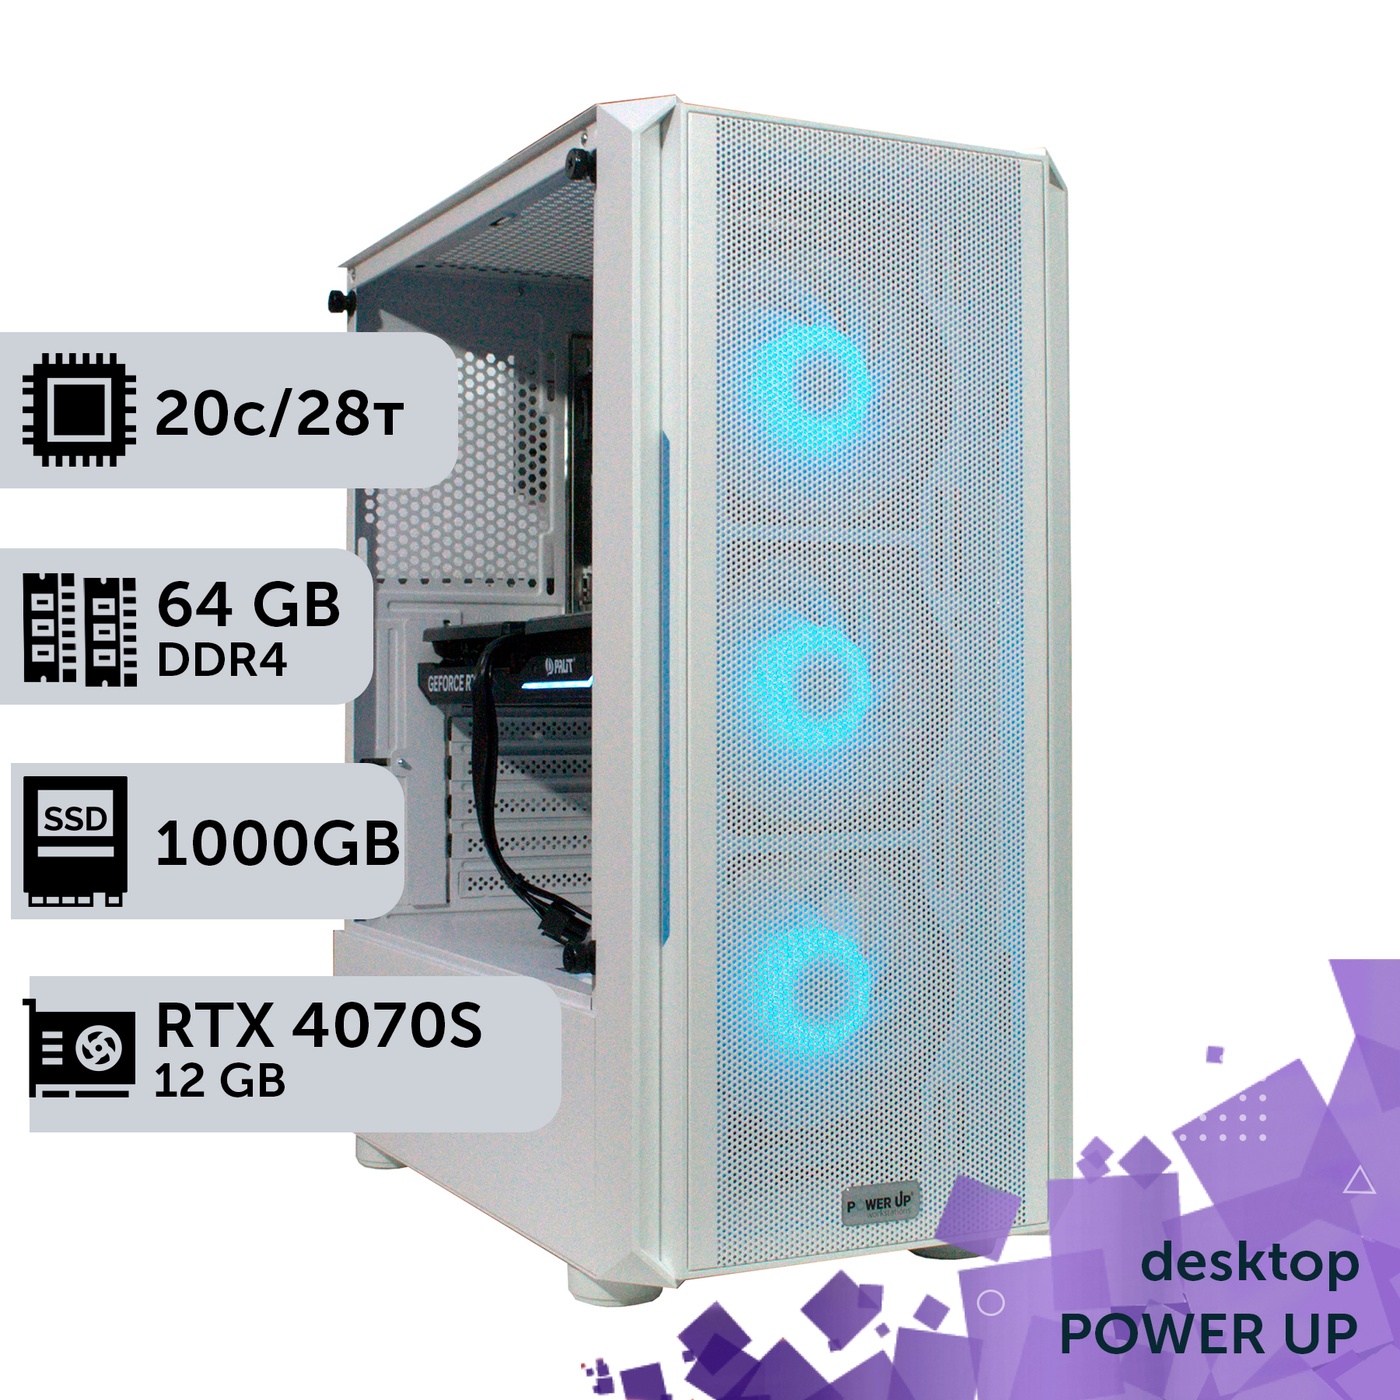 Рабочая станция PowerUp Desktop #350 Core i7 14700K/64 GB/SSD 1TB/GeForce RTX 4070 Super 12GB